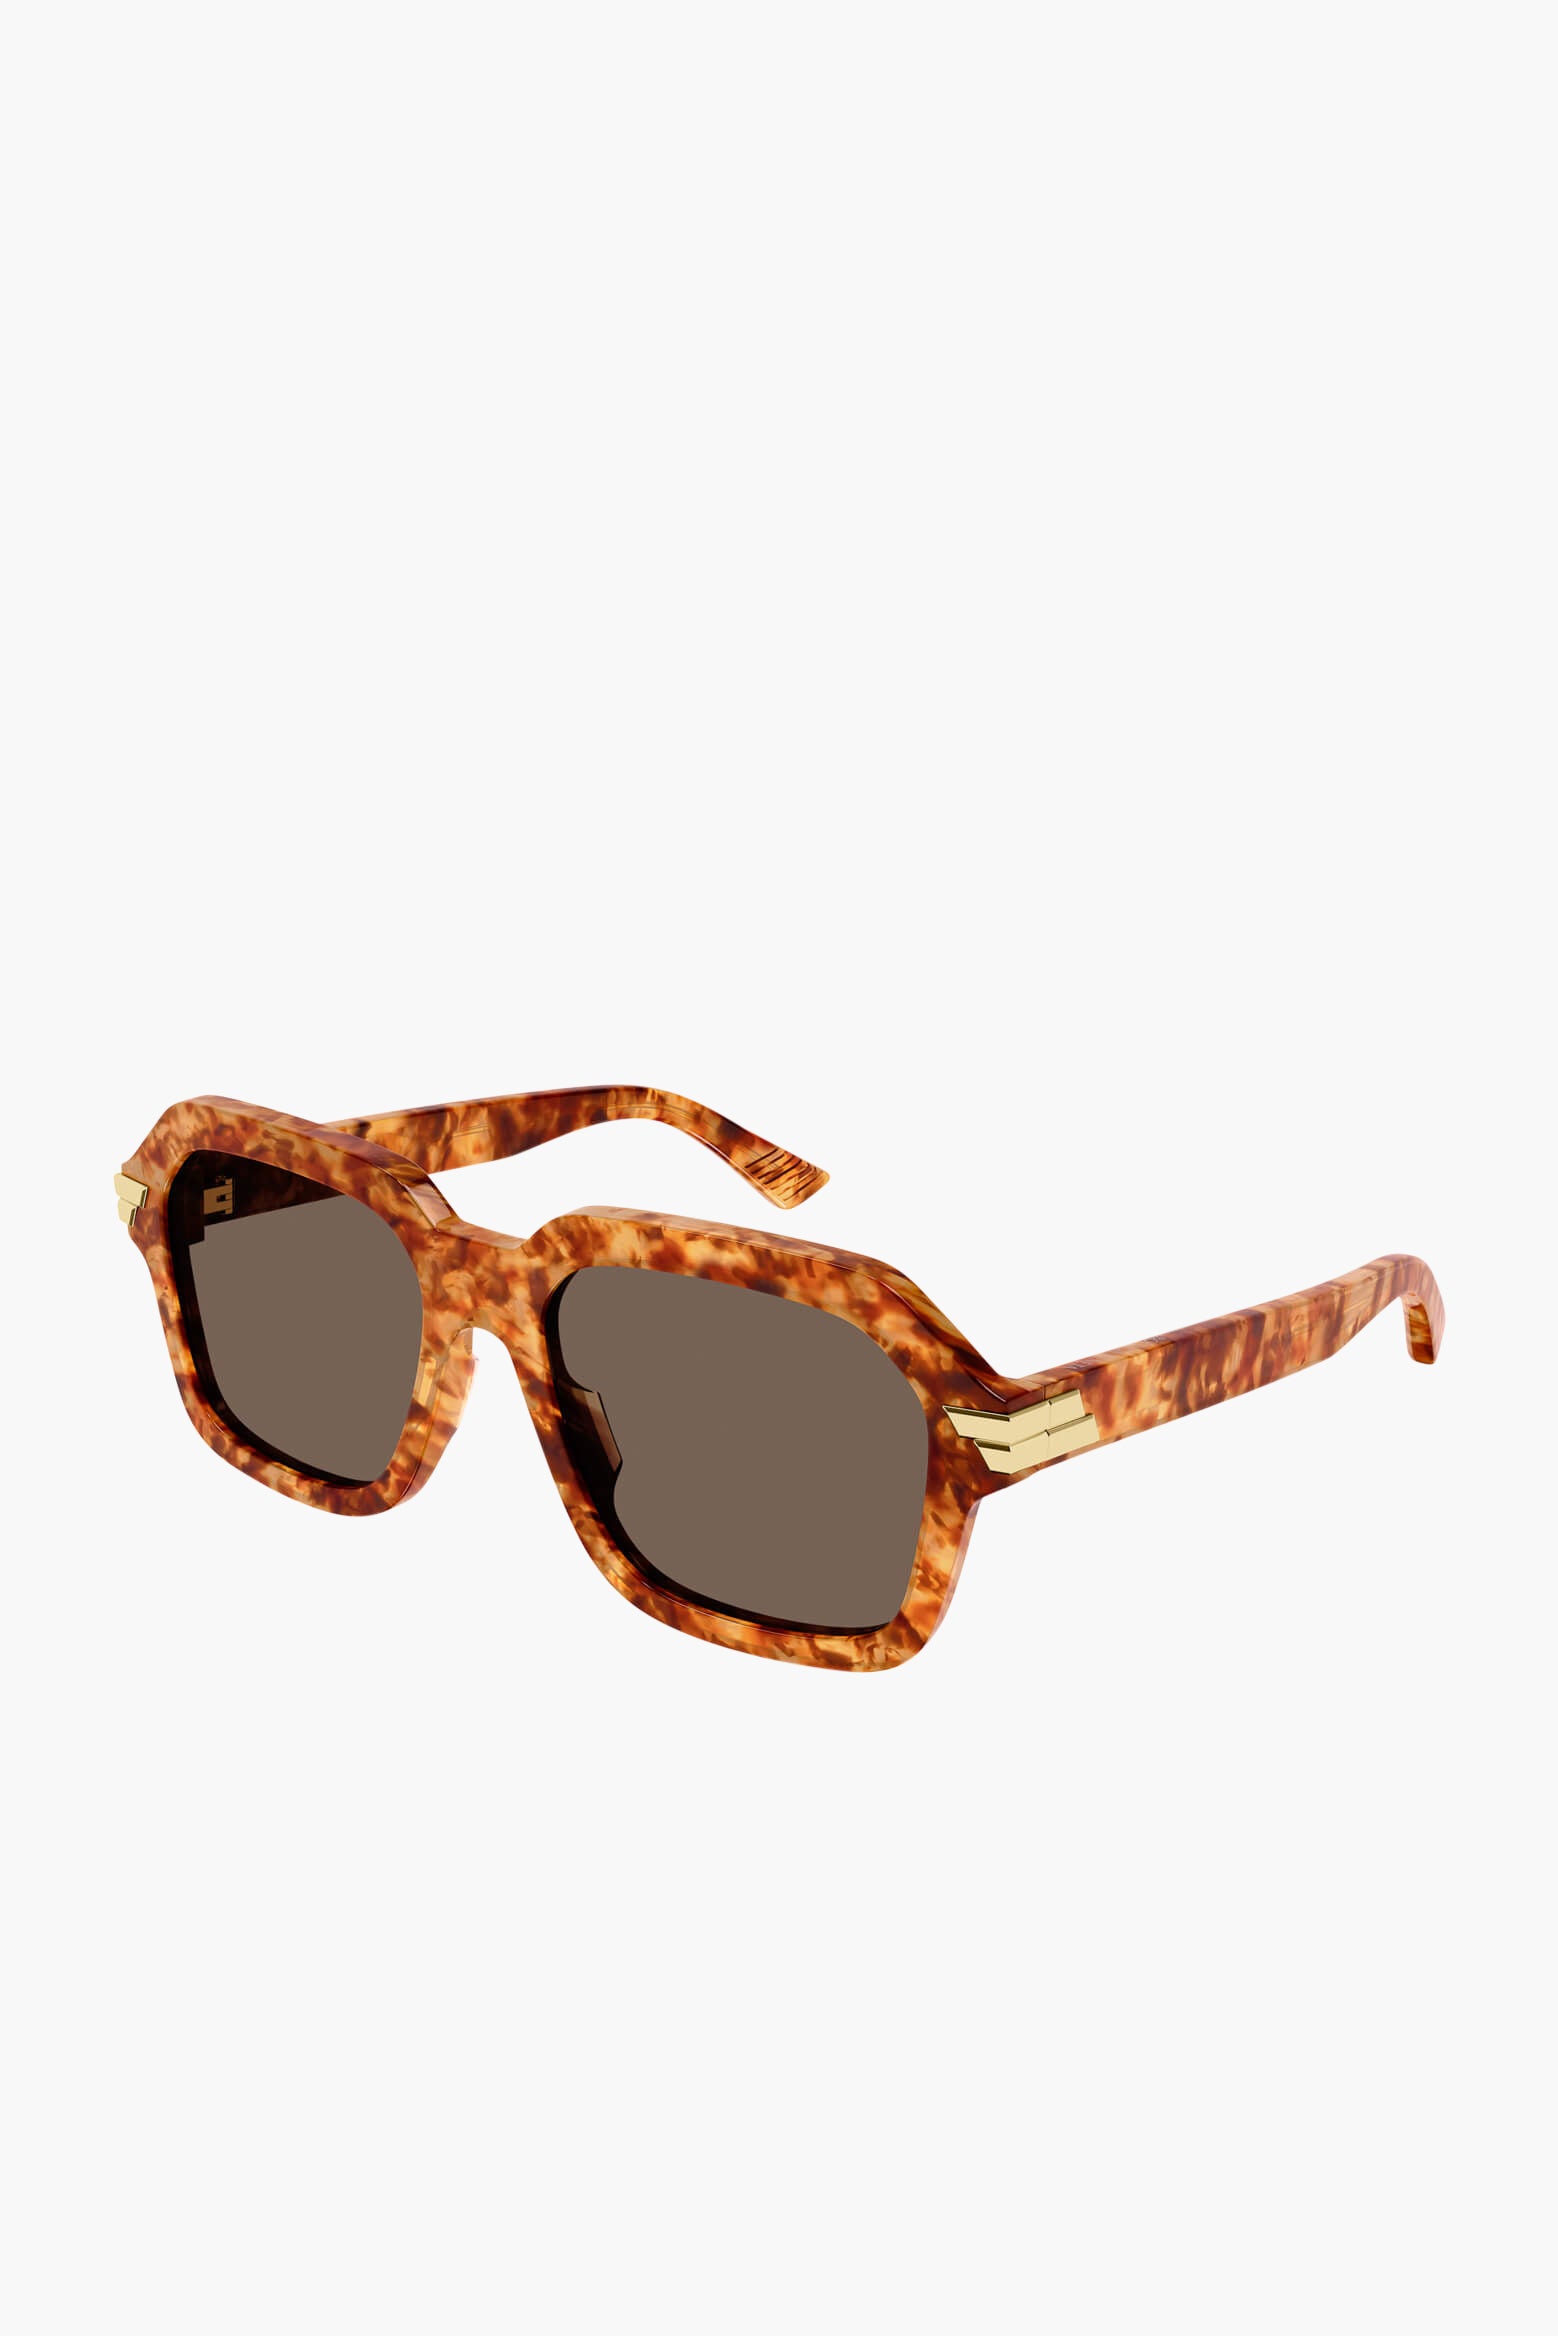 Bottega Veneta Bold Ribbon Acetate Sunglasses in Brown available at The New Trend